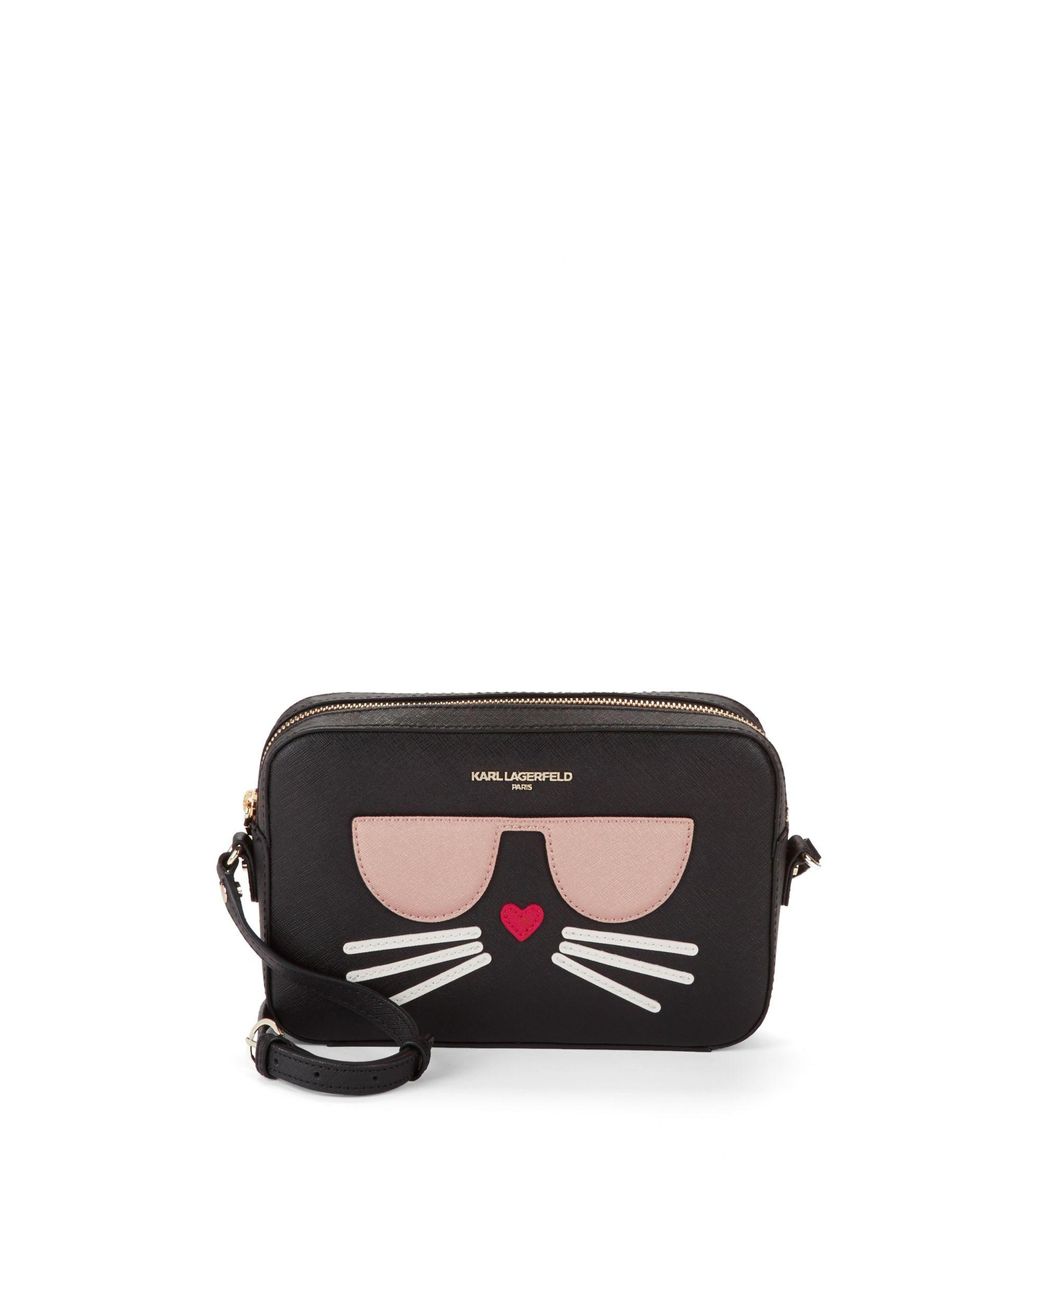 Karl Lagerfeld Synthetic Maybelle Cat Shoulder Bag in Black - Lyst